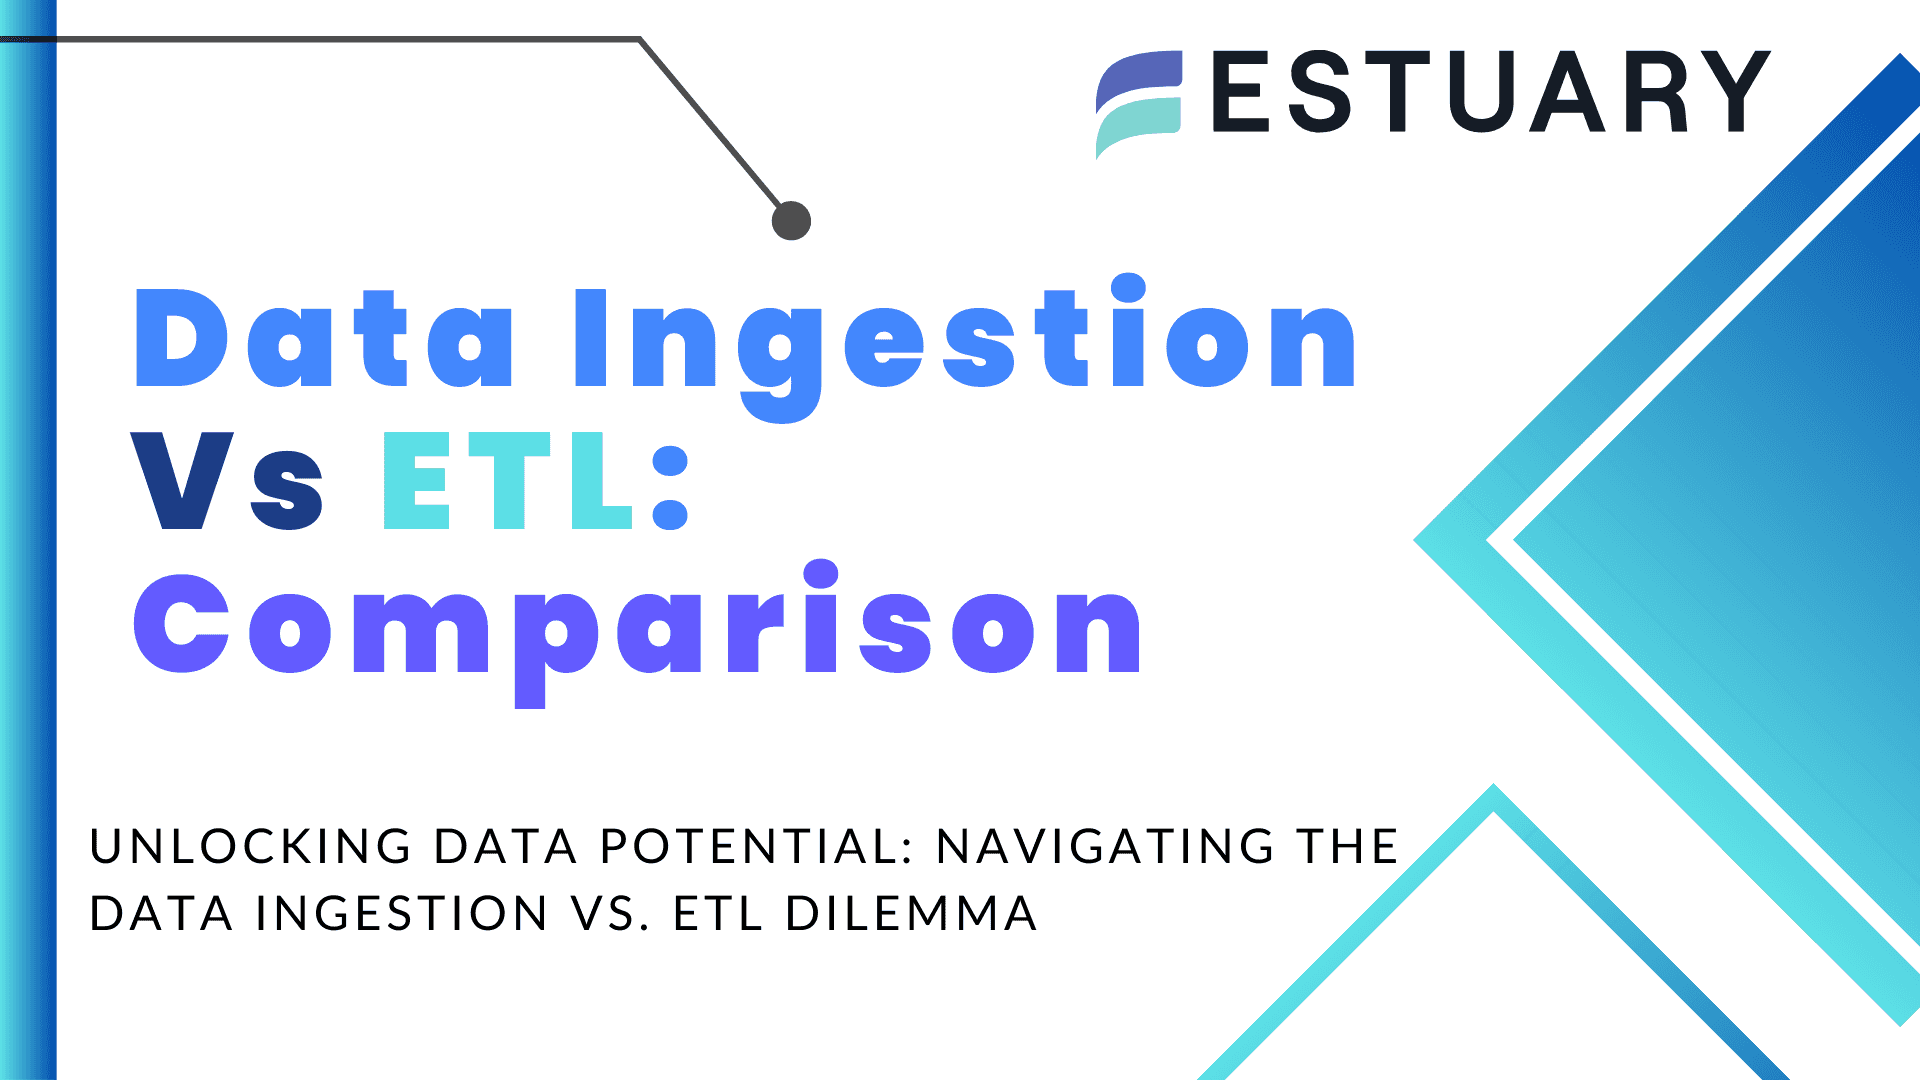 Data Ingestion vs ETL Comparison: What Suits Your Needs?